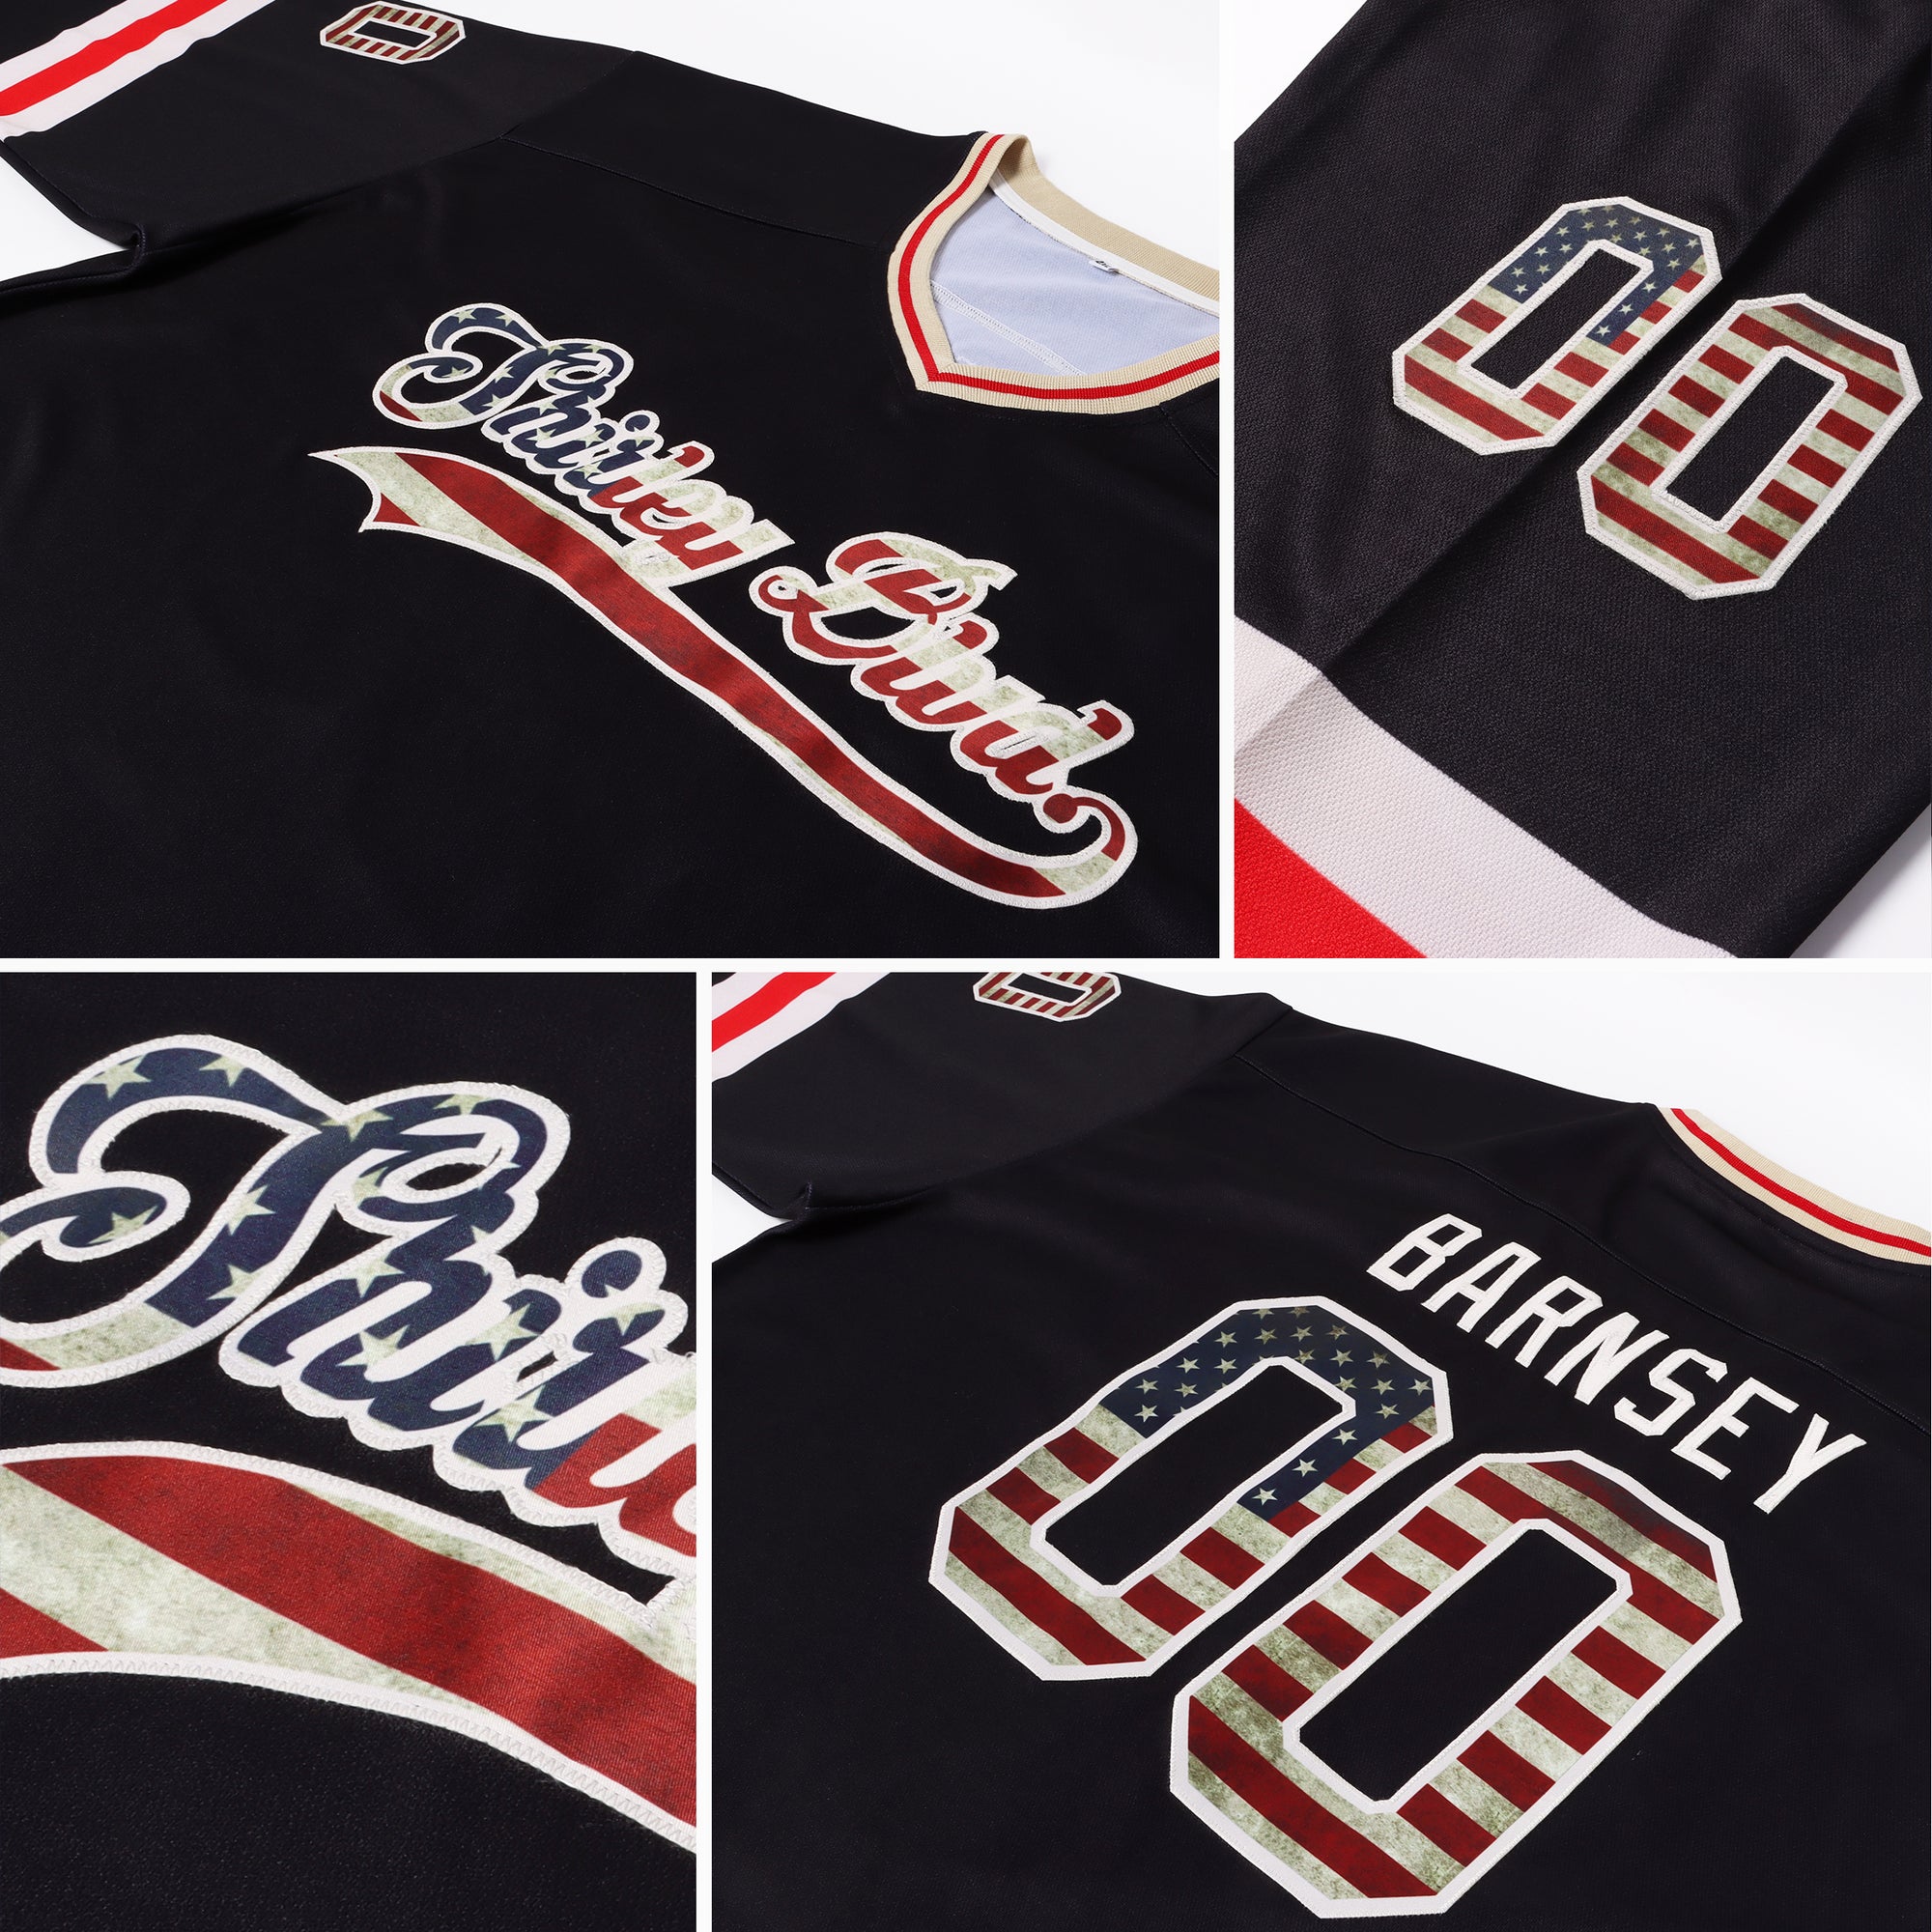 Custom Black Vintage USA Flag-Cream Hockey Jersey Women's Size:M